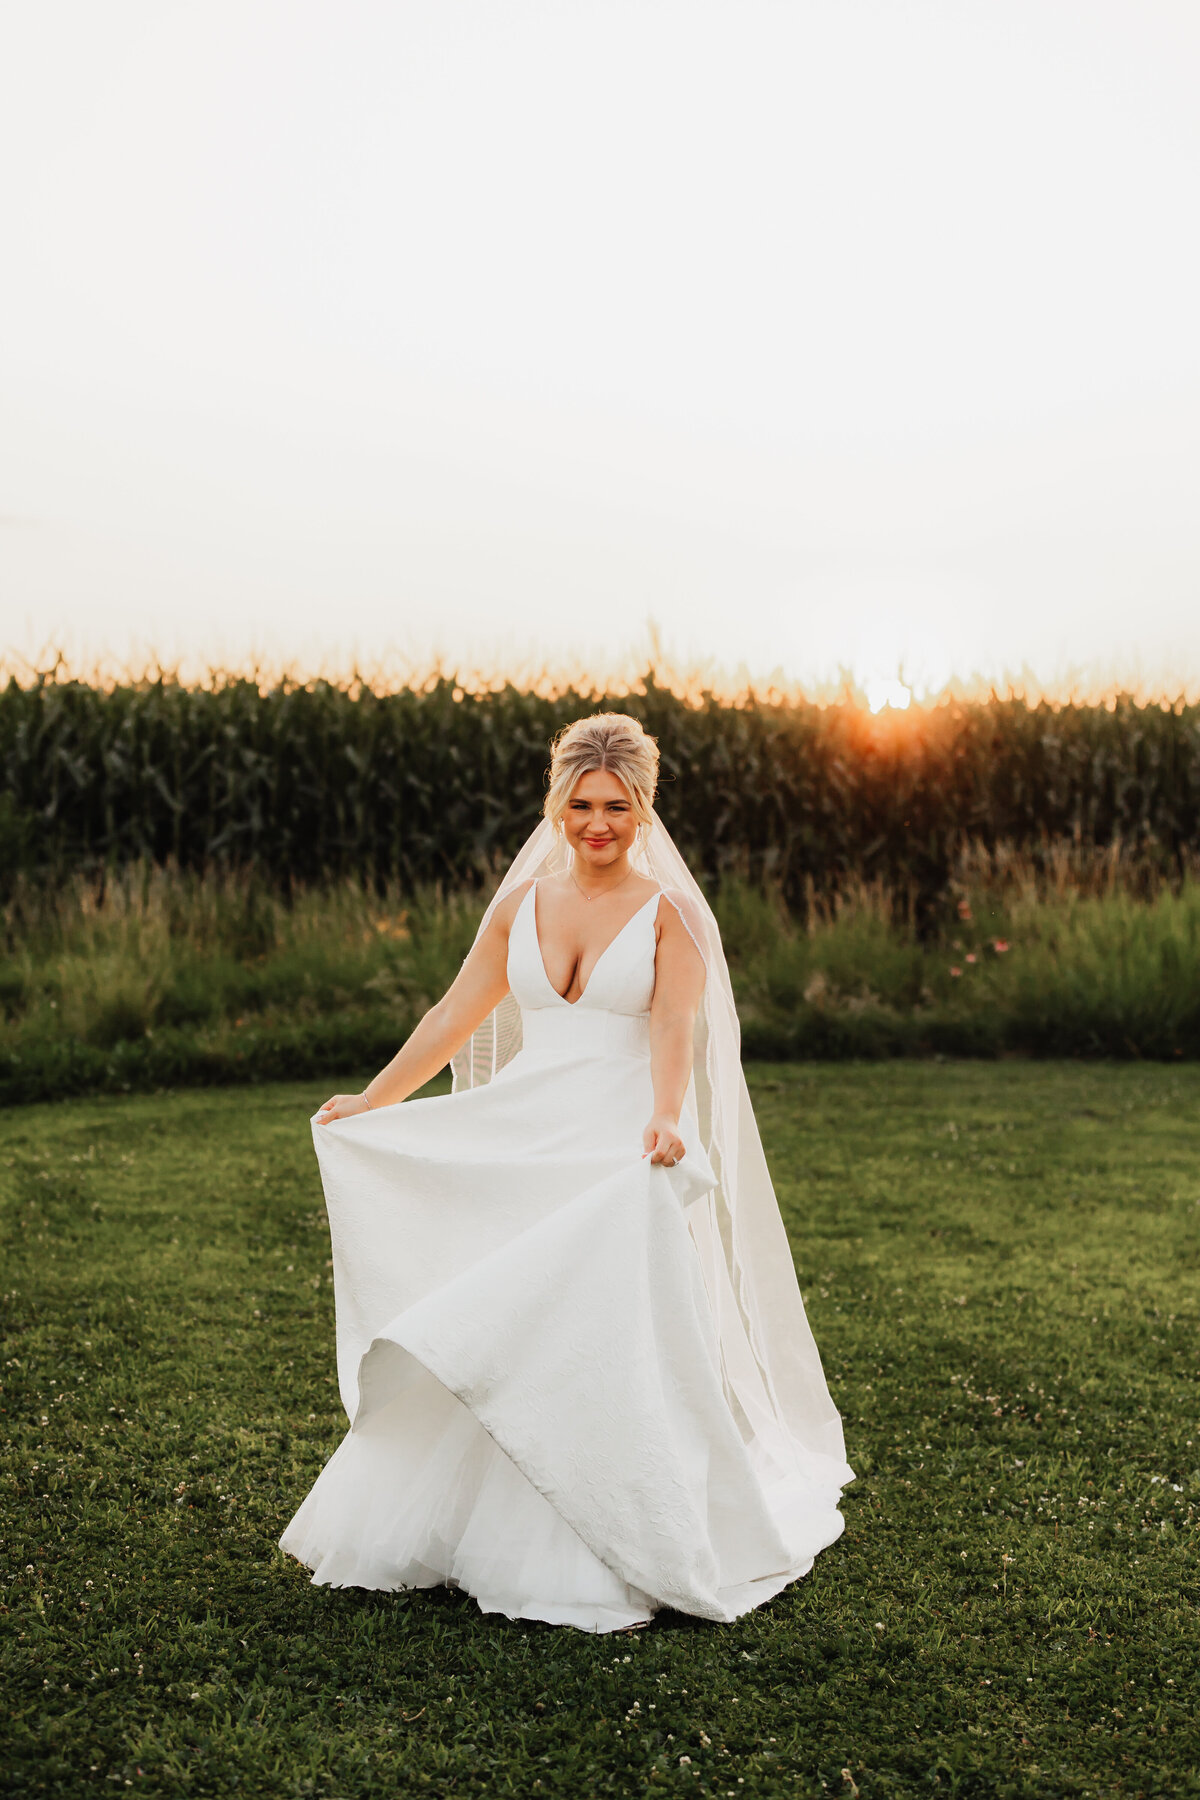 A bride dances in front of a corn field.